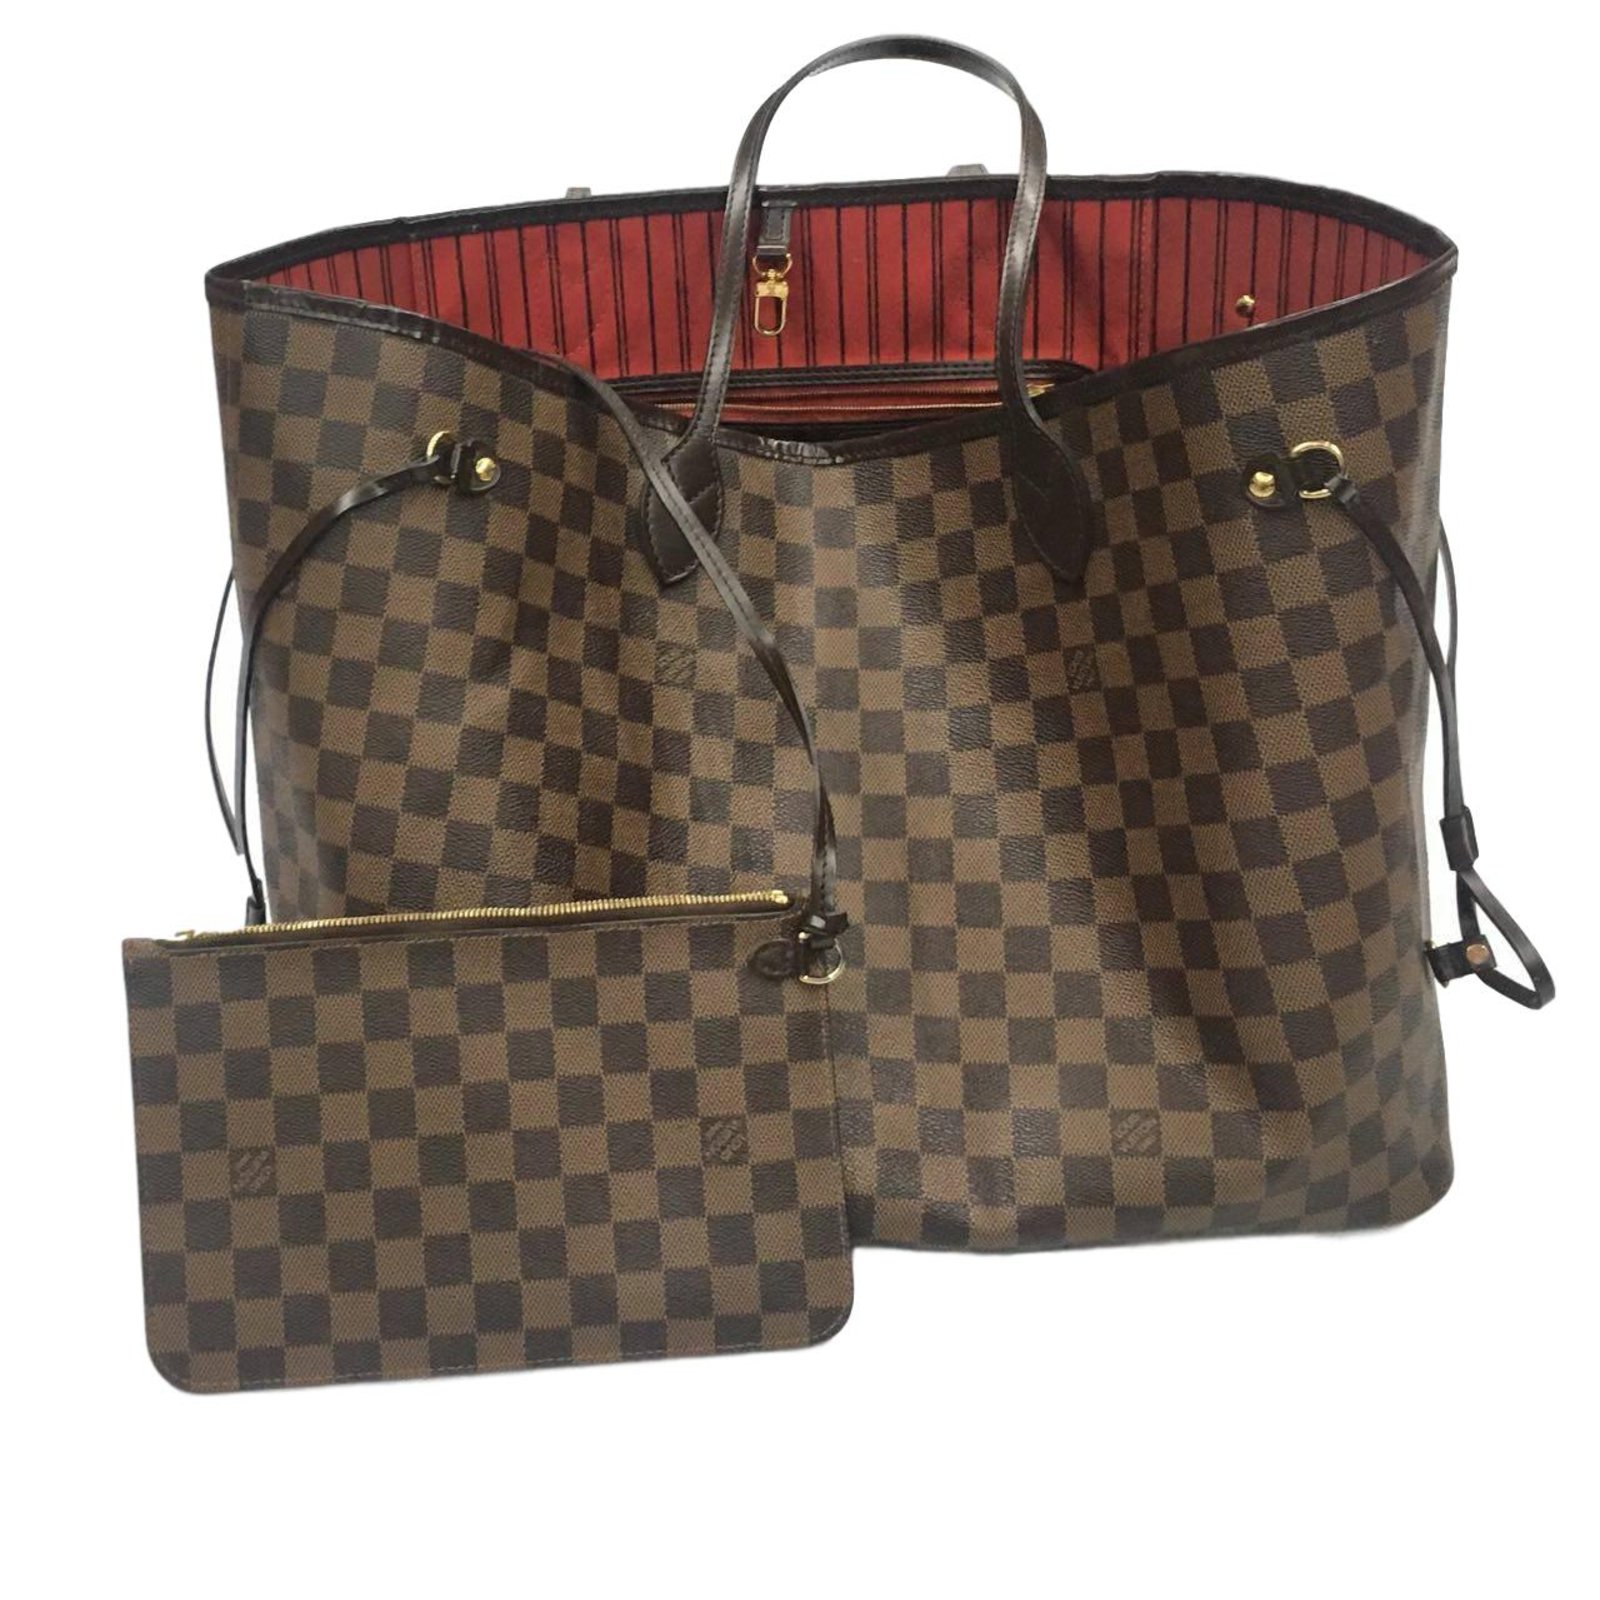 Louis Vuitton Neverfull Handbag - Dark Brown